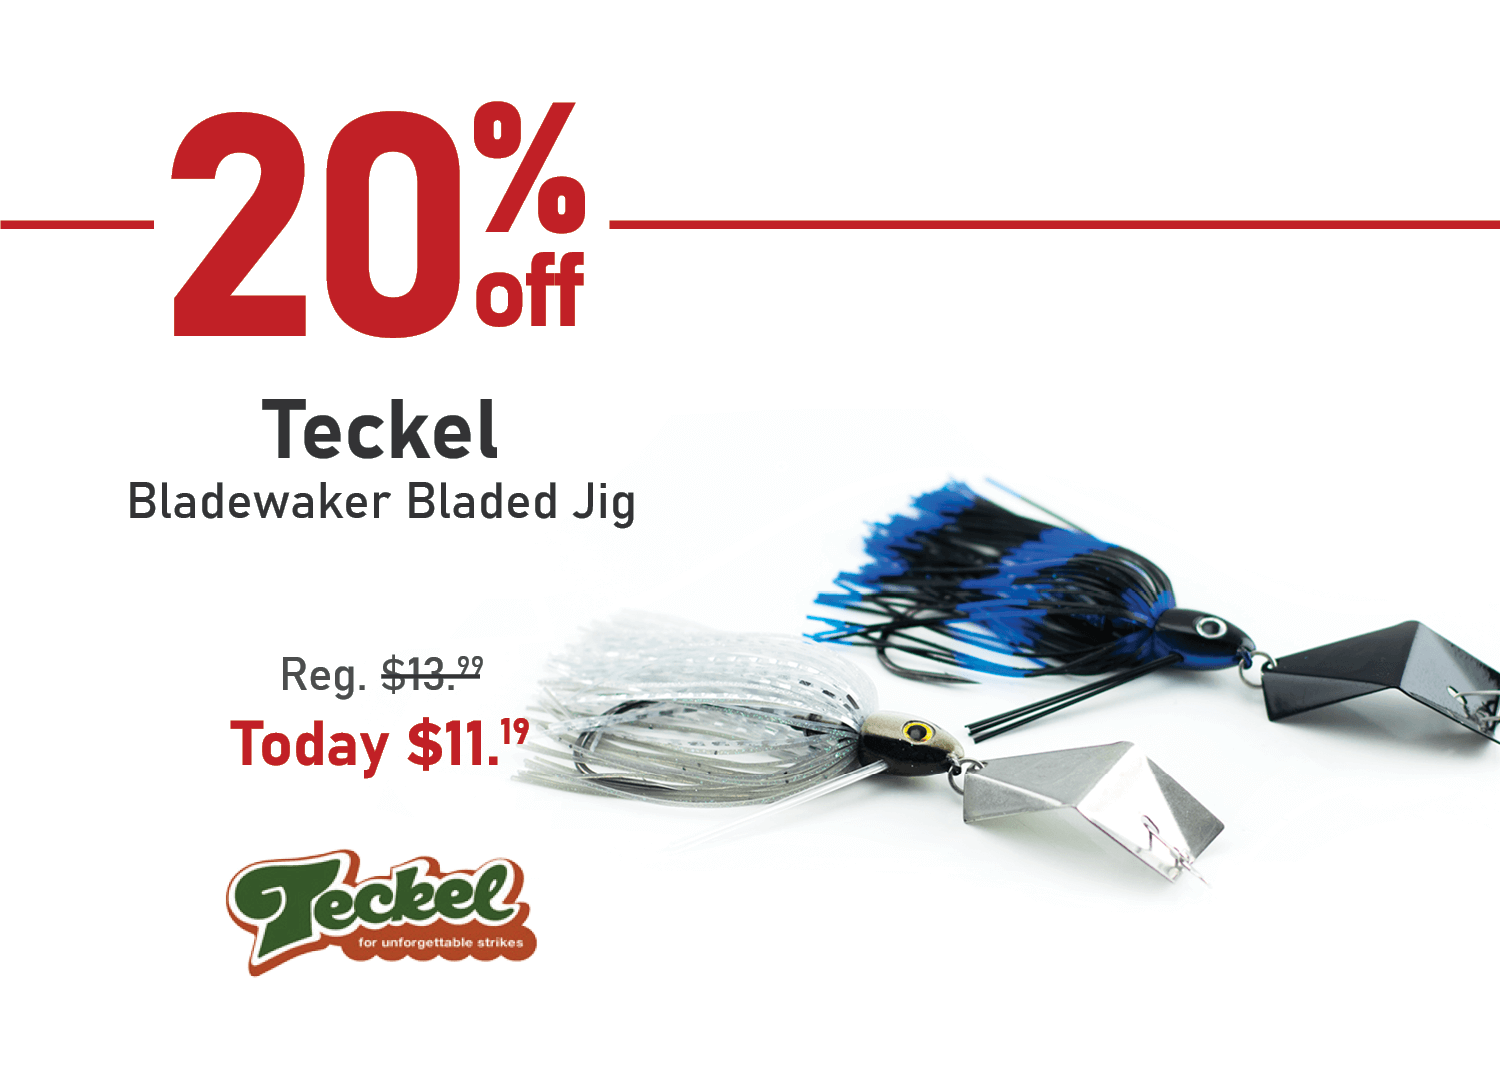 Save 20% on the Teckel Bladewaker Bladed Jig